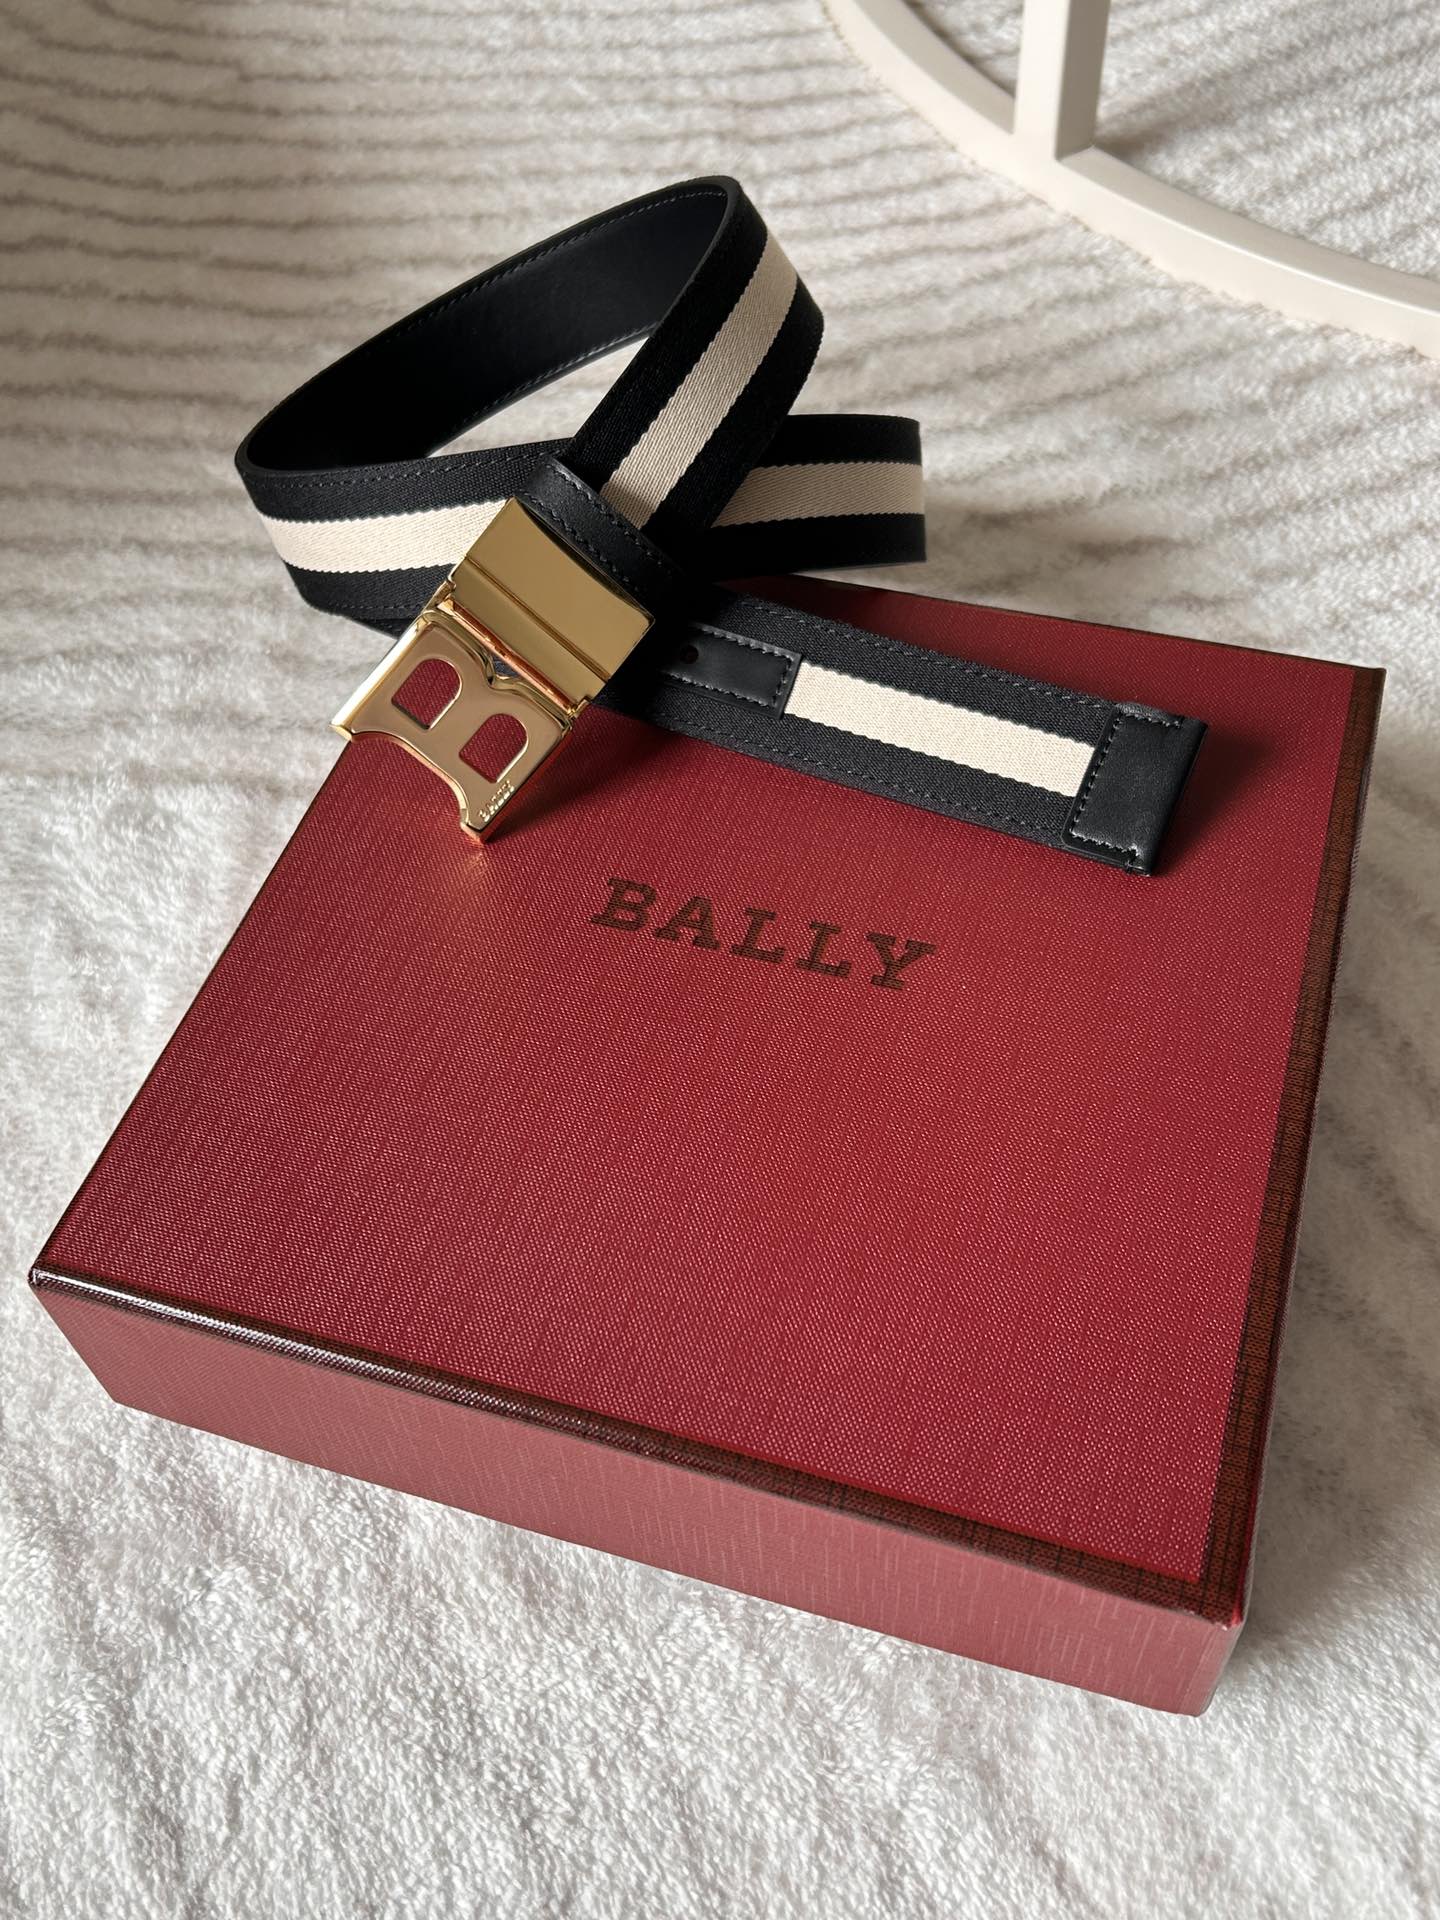 BALLY巴利专柜同款男士时尚布配皮双用腰带宽3.4cmTamal融入了永恒经典的Bally黑白条纹且具